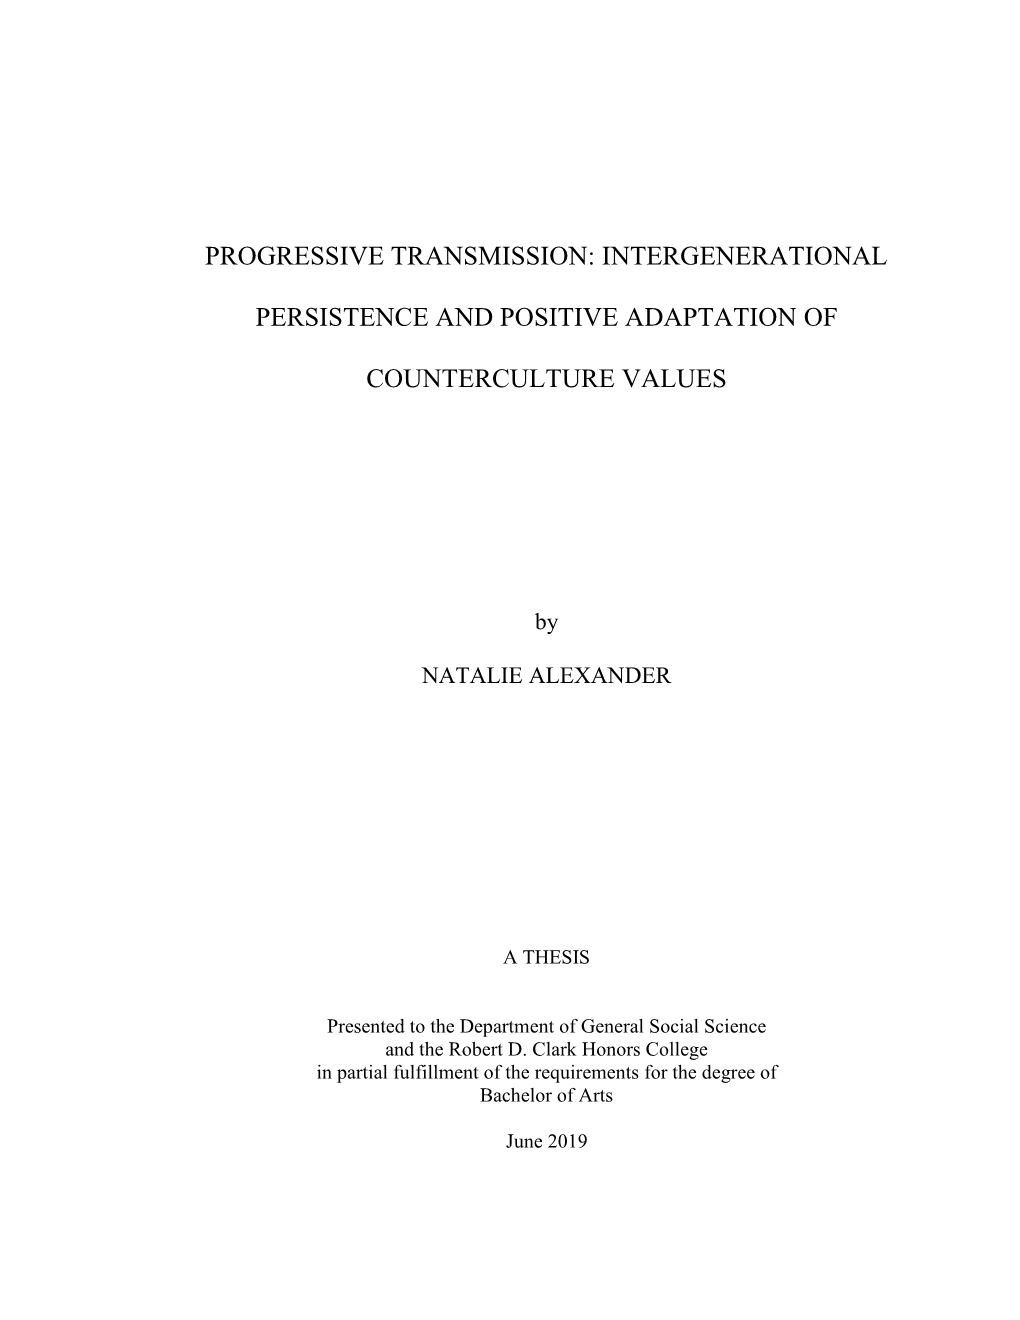 Progressive Transmission: Intergenerational Persistence and Positive Adaptation of Counterculture Values